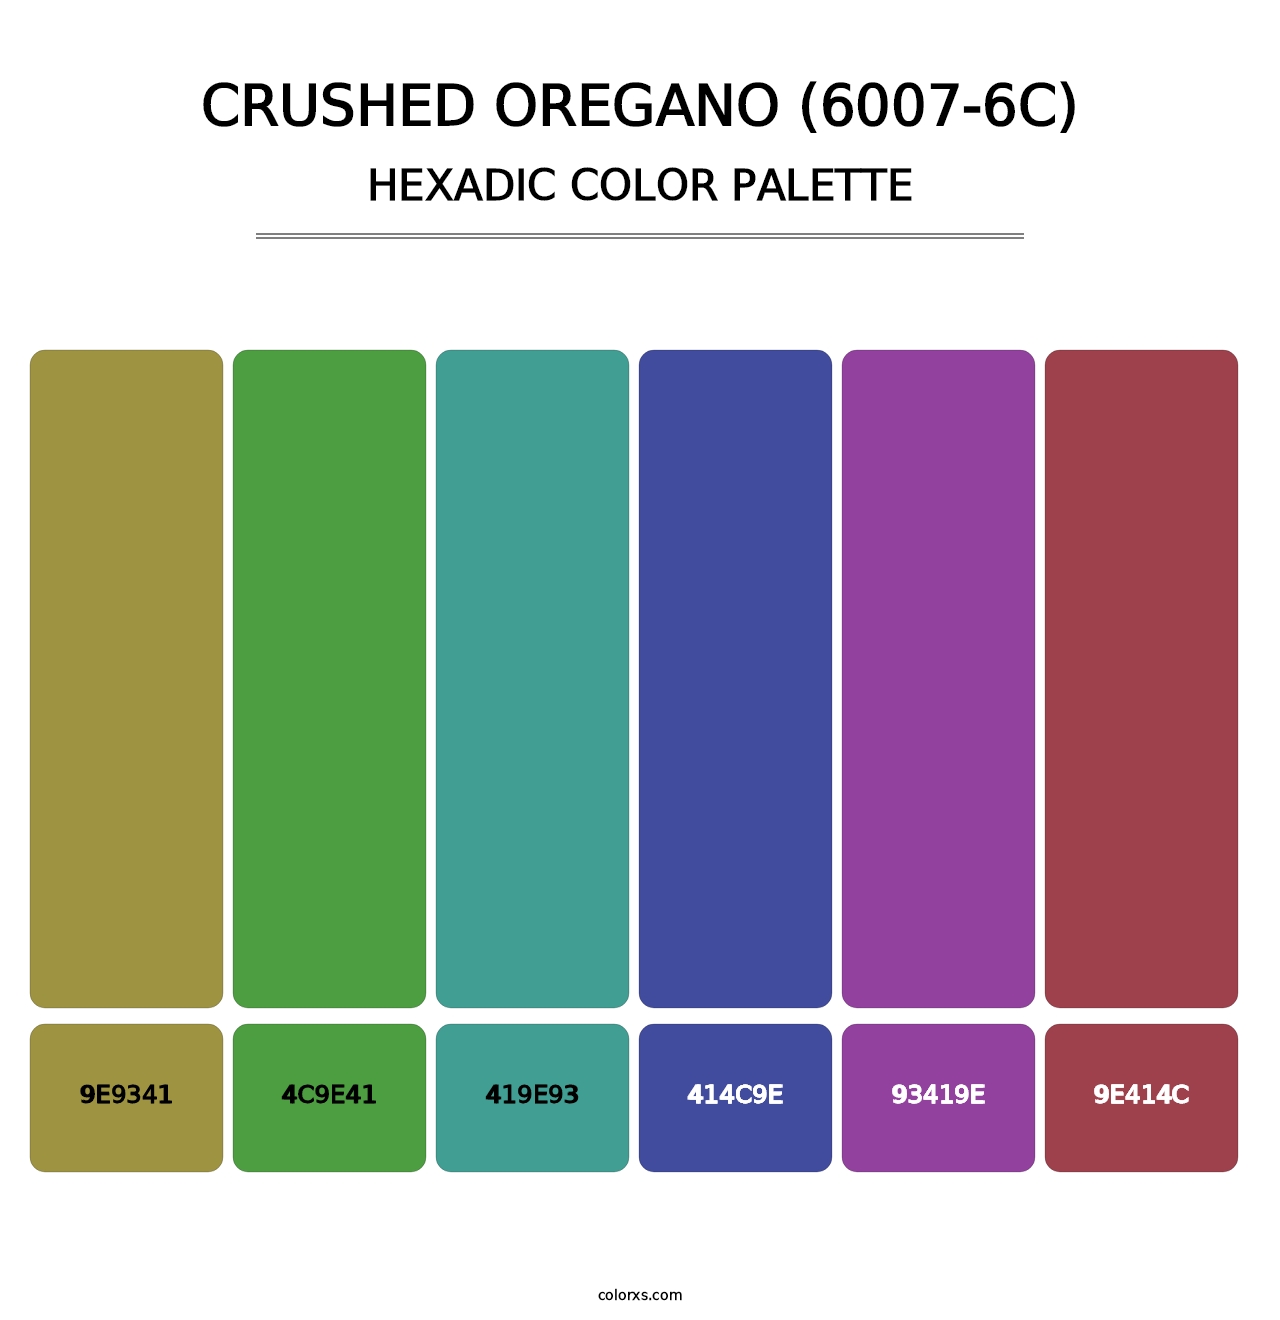 Crushed Oregano (6007-6C) - Hexadic Color Palette